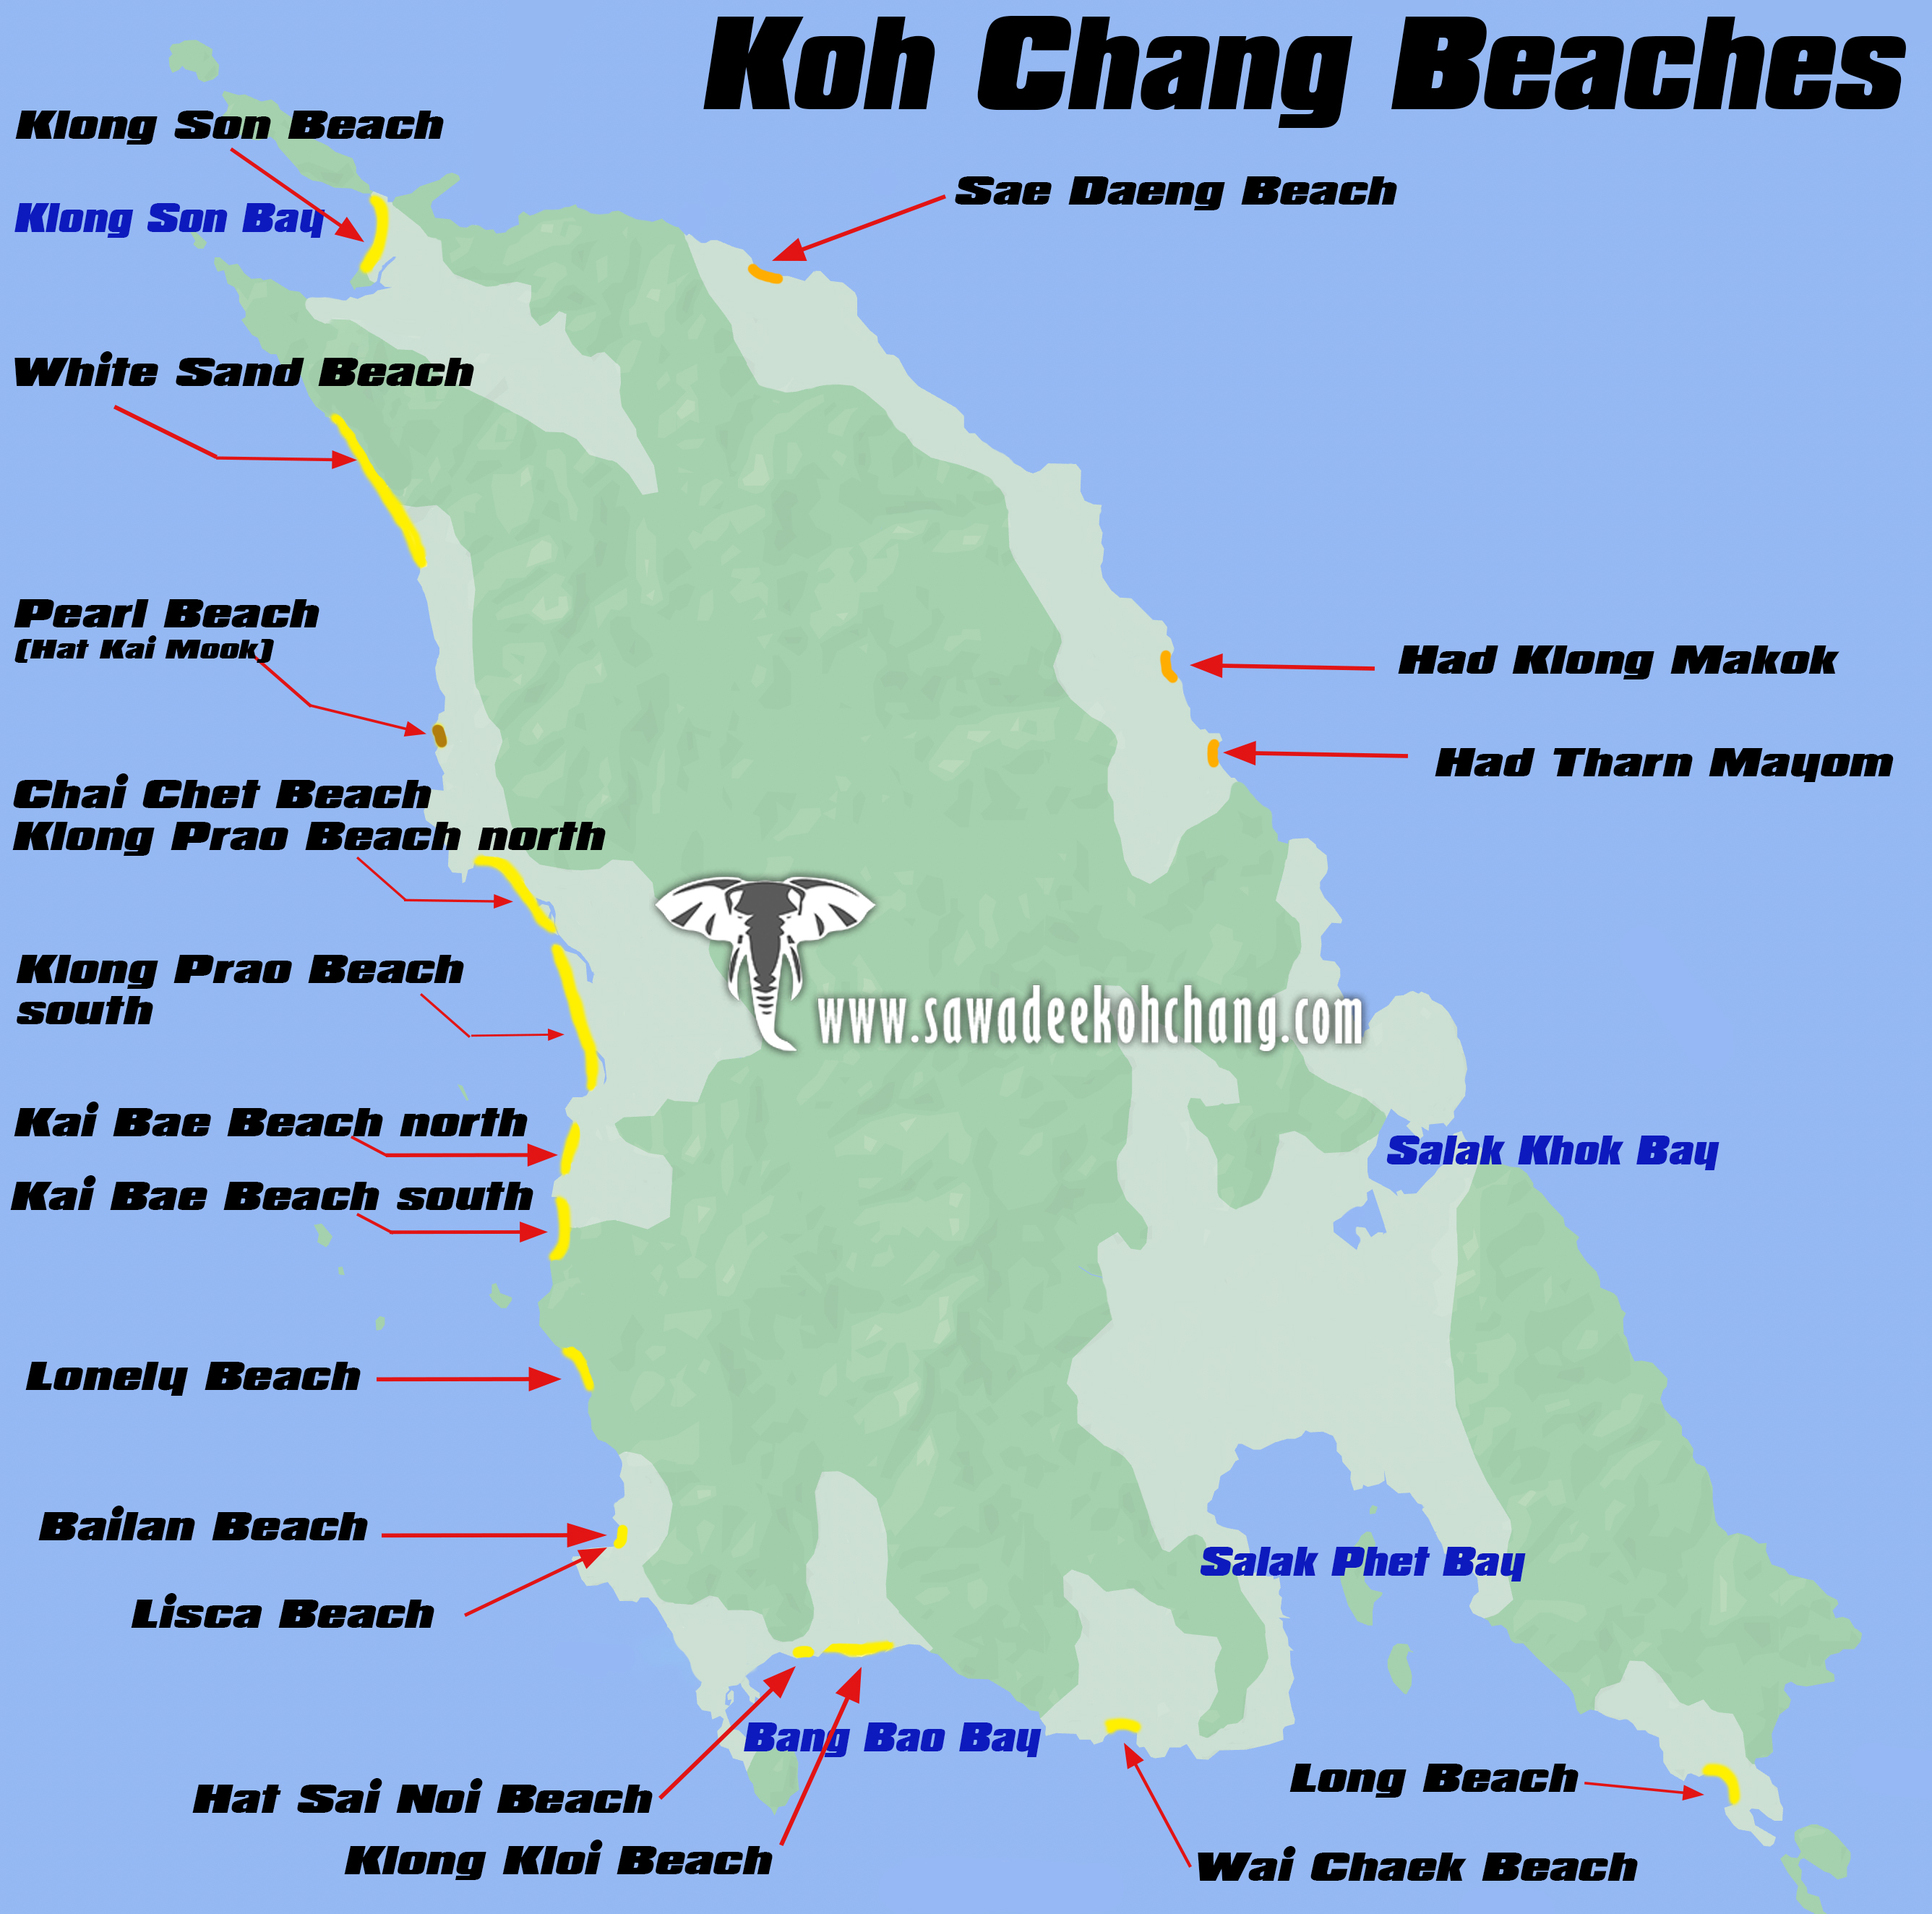 Koh Chang beaches